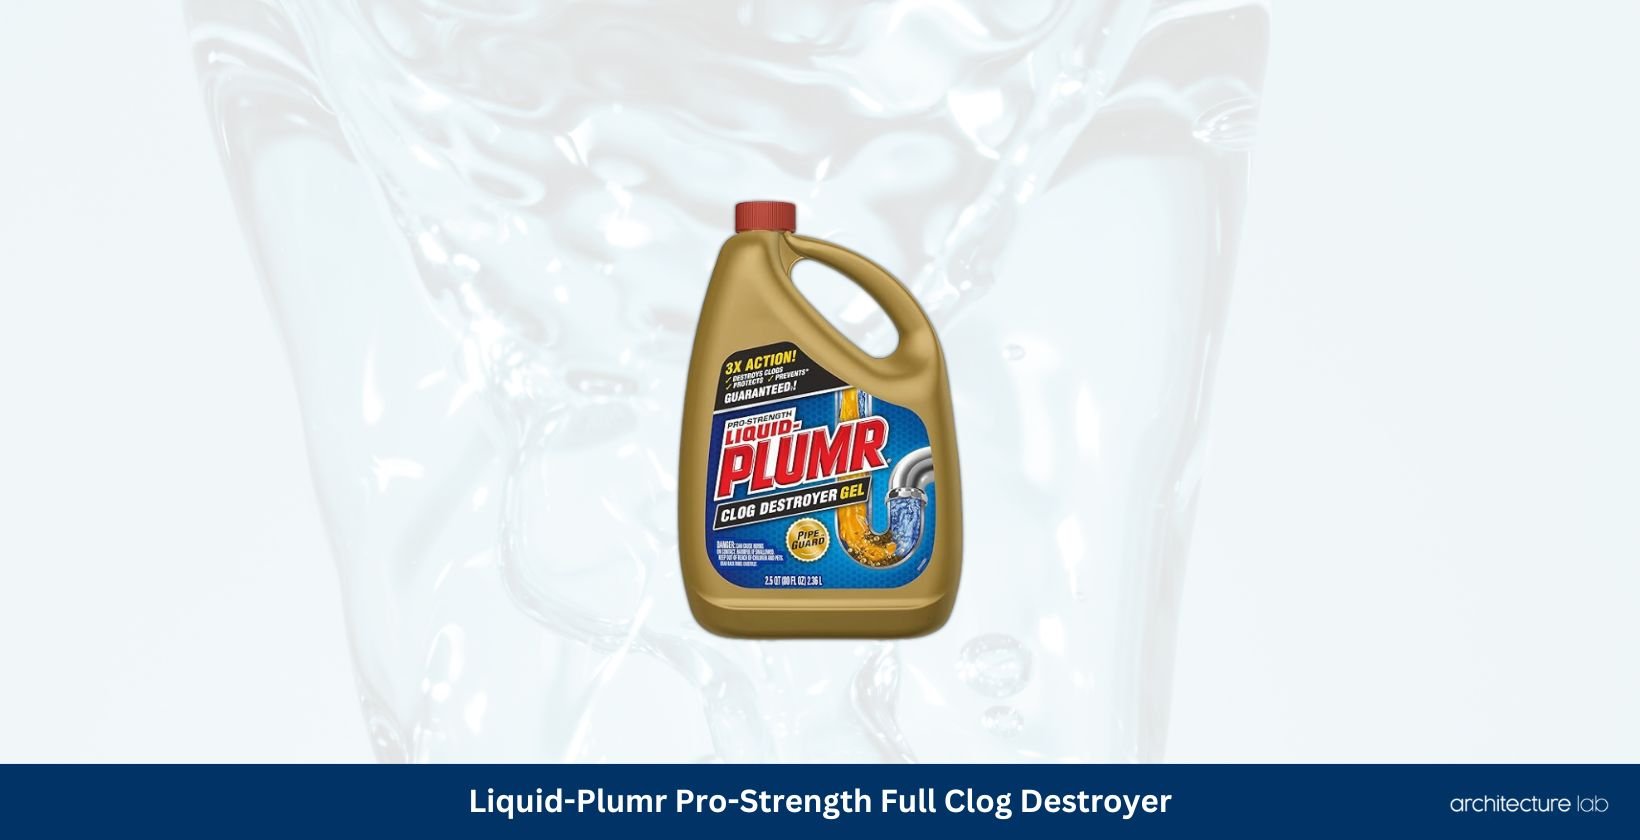 Liquid plumr pro strength full clog destroyer